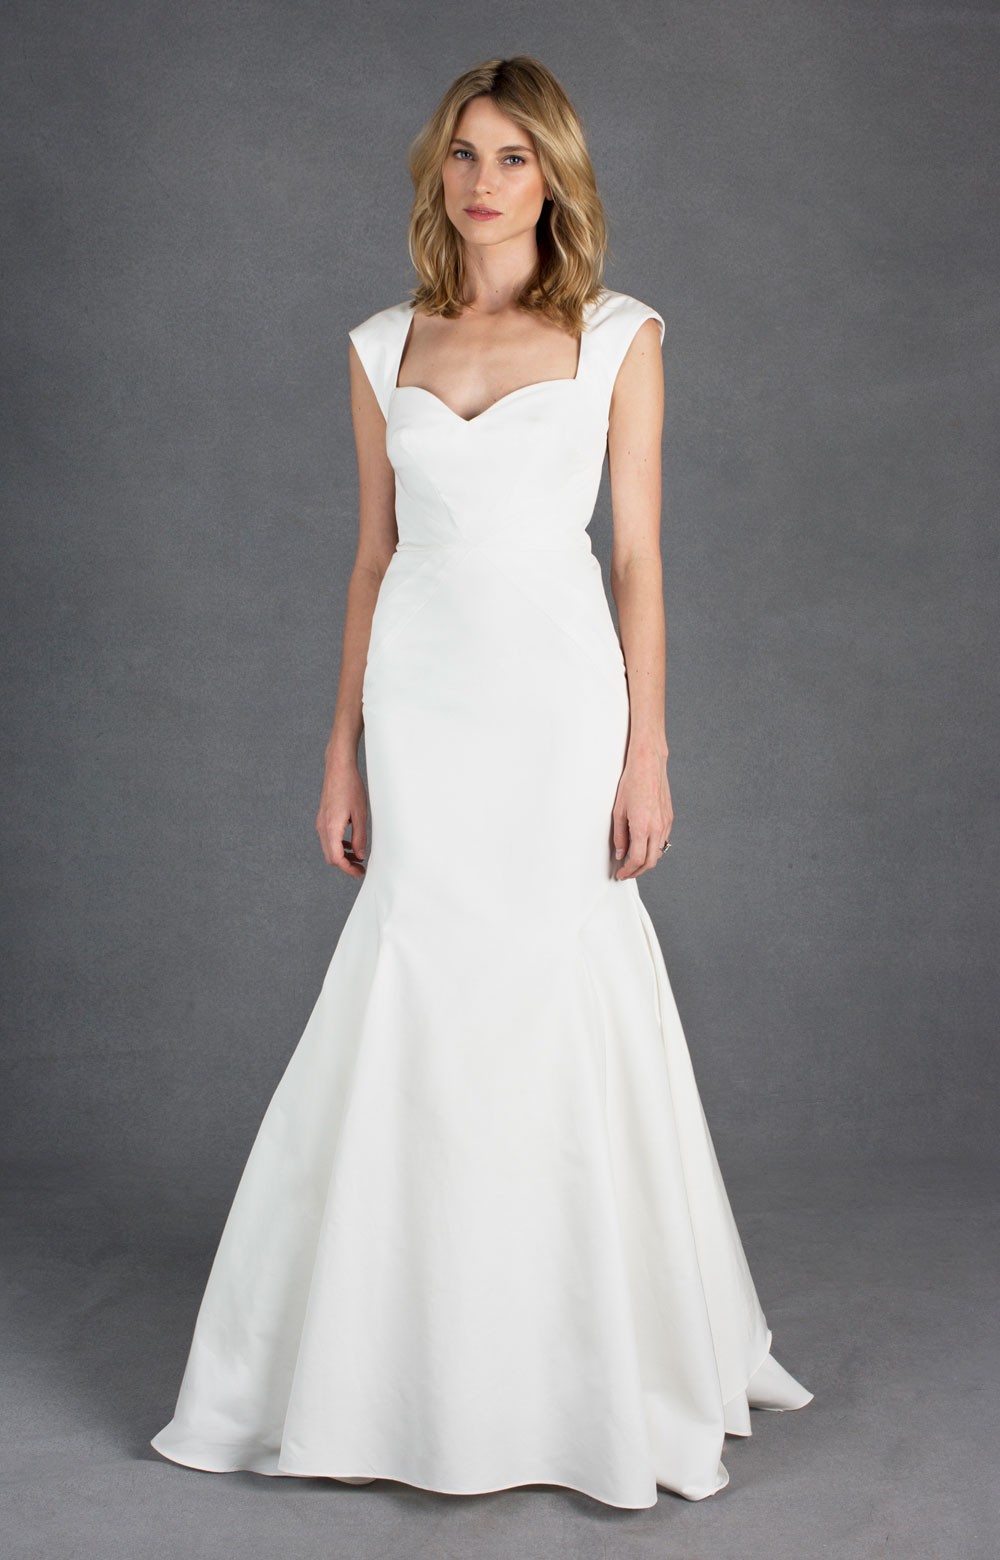 Lyst - Nicole Miller Jane Bridal Gown in White